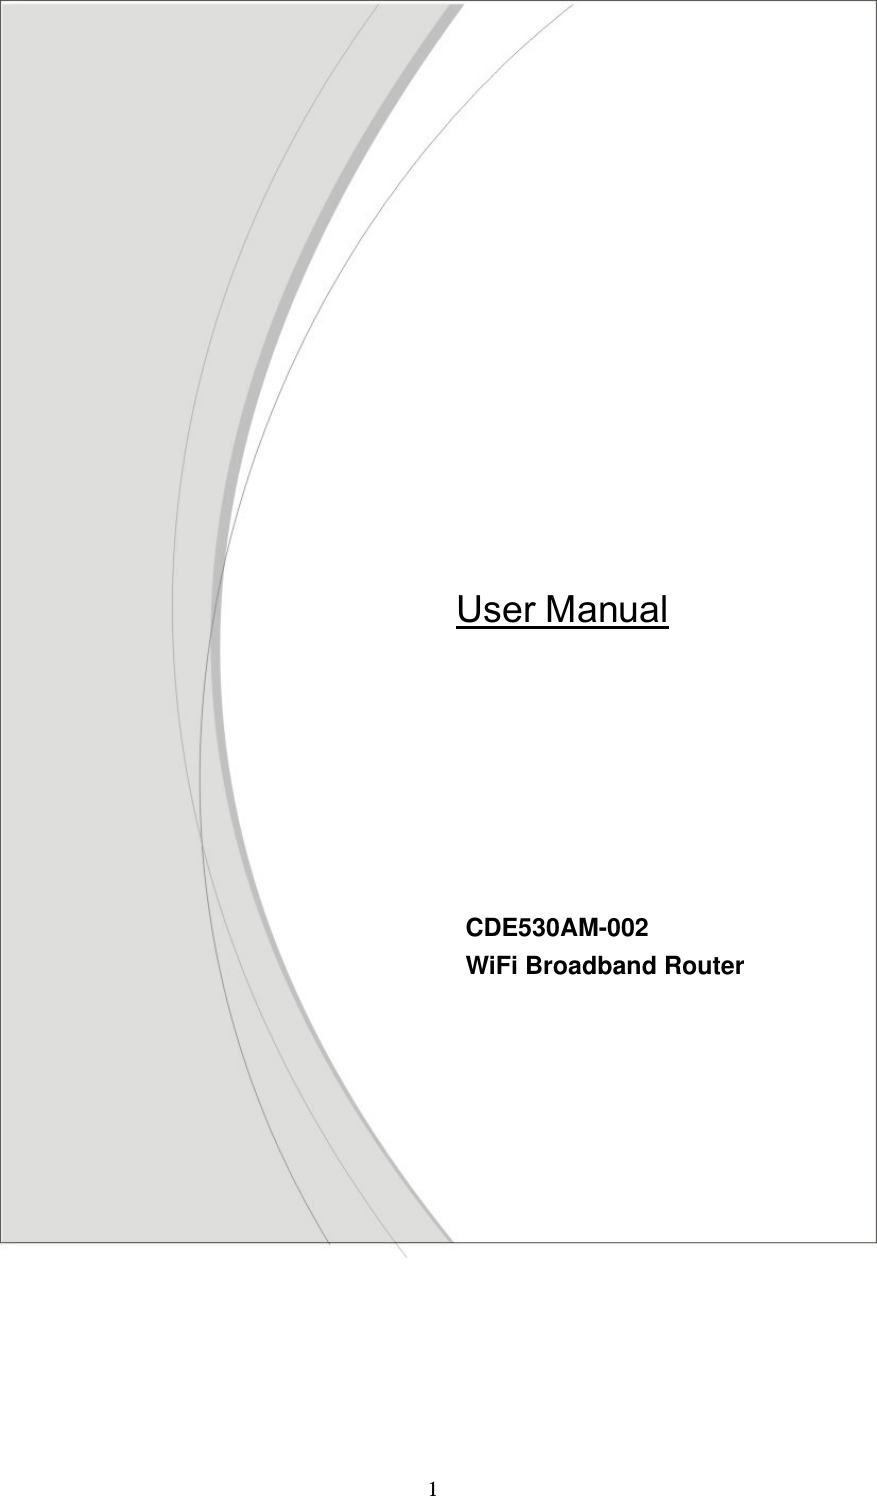  1  User Manual  CDE530AM-002  WiFi Broadband Router 